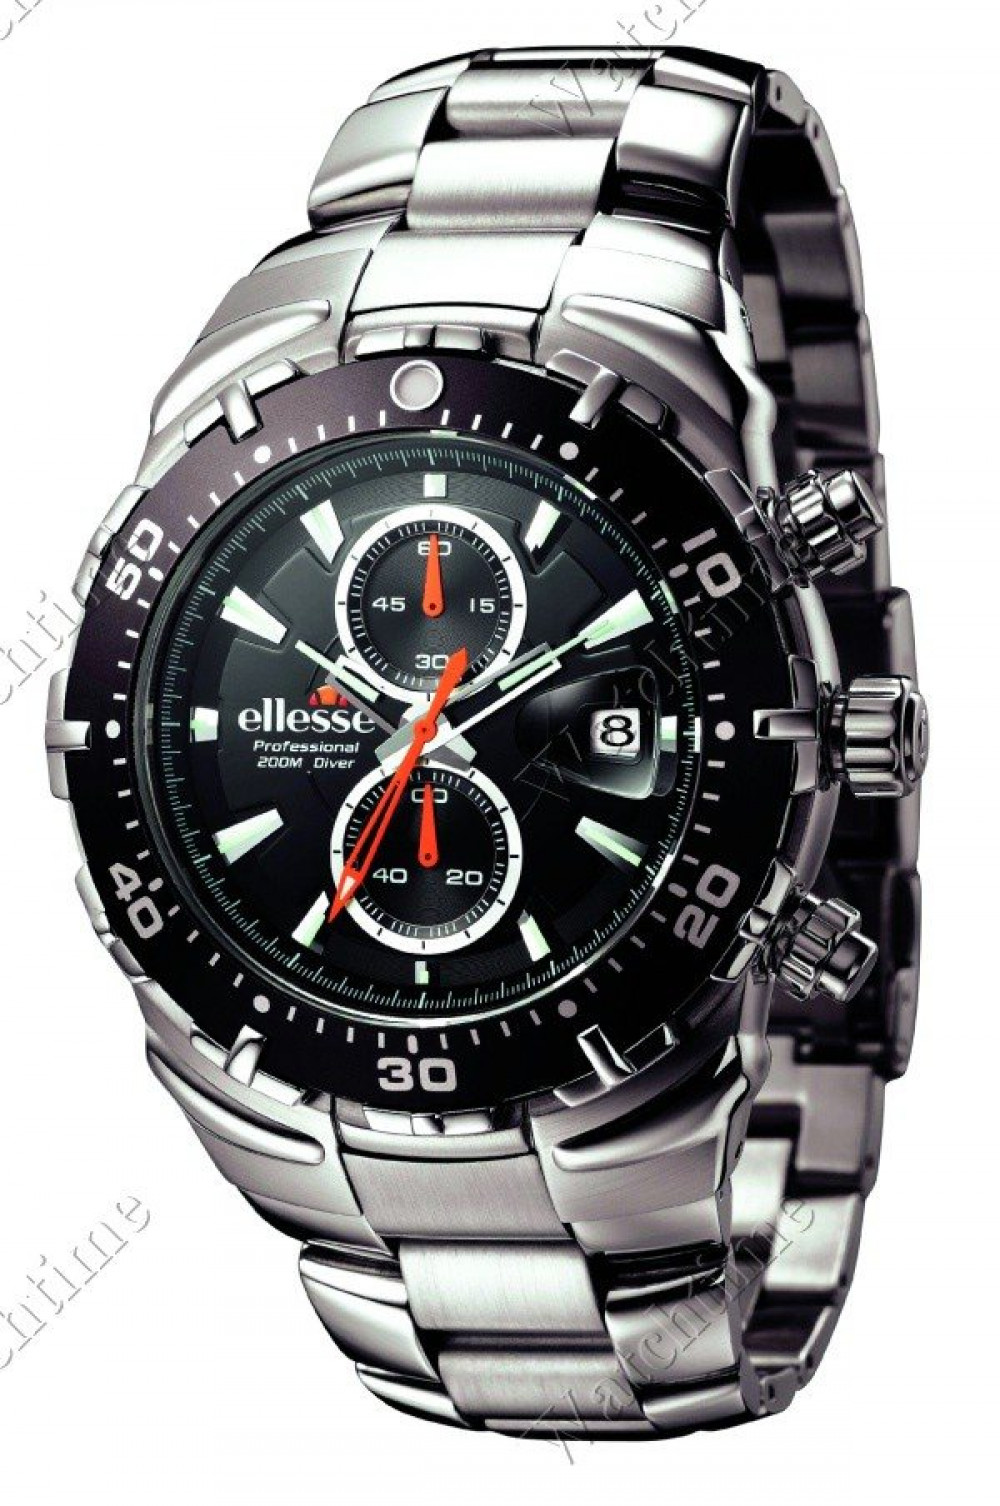 Zegarek firmy Ellesse, model P200 CH Herren